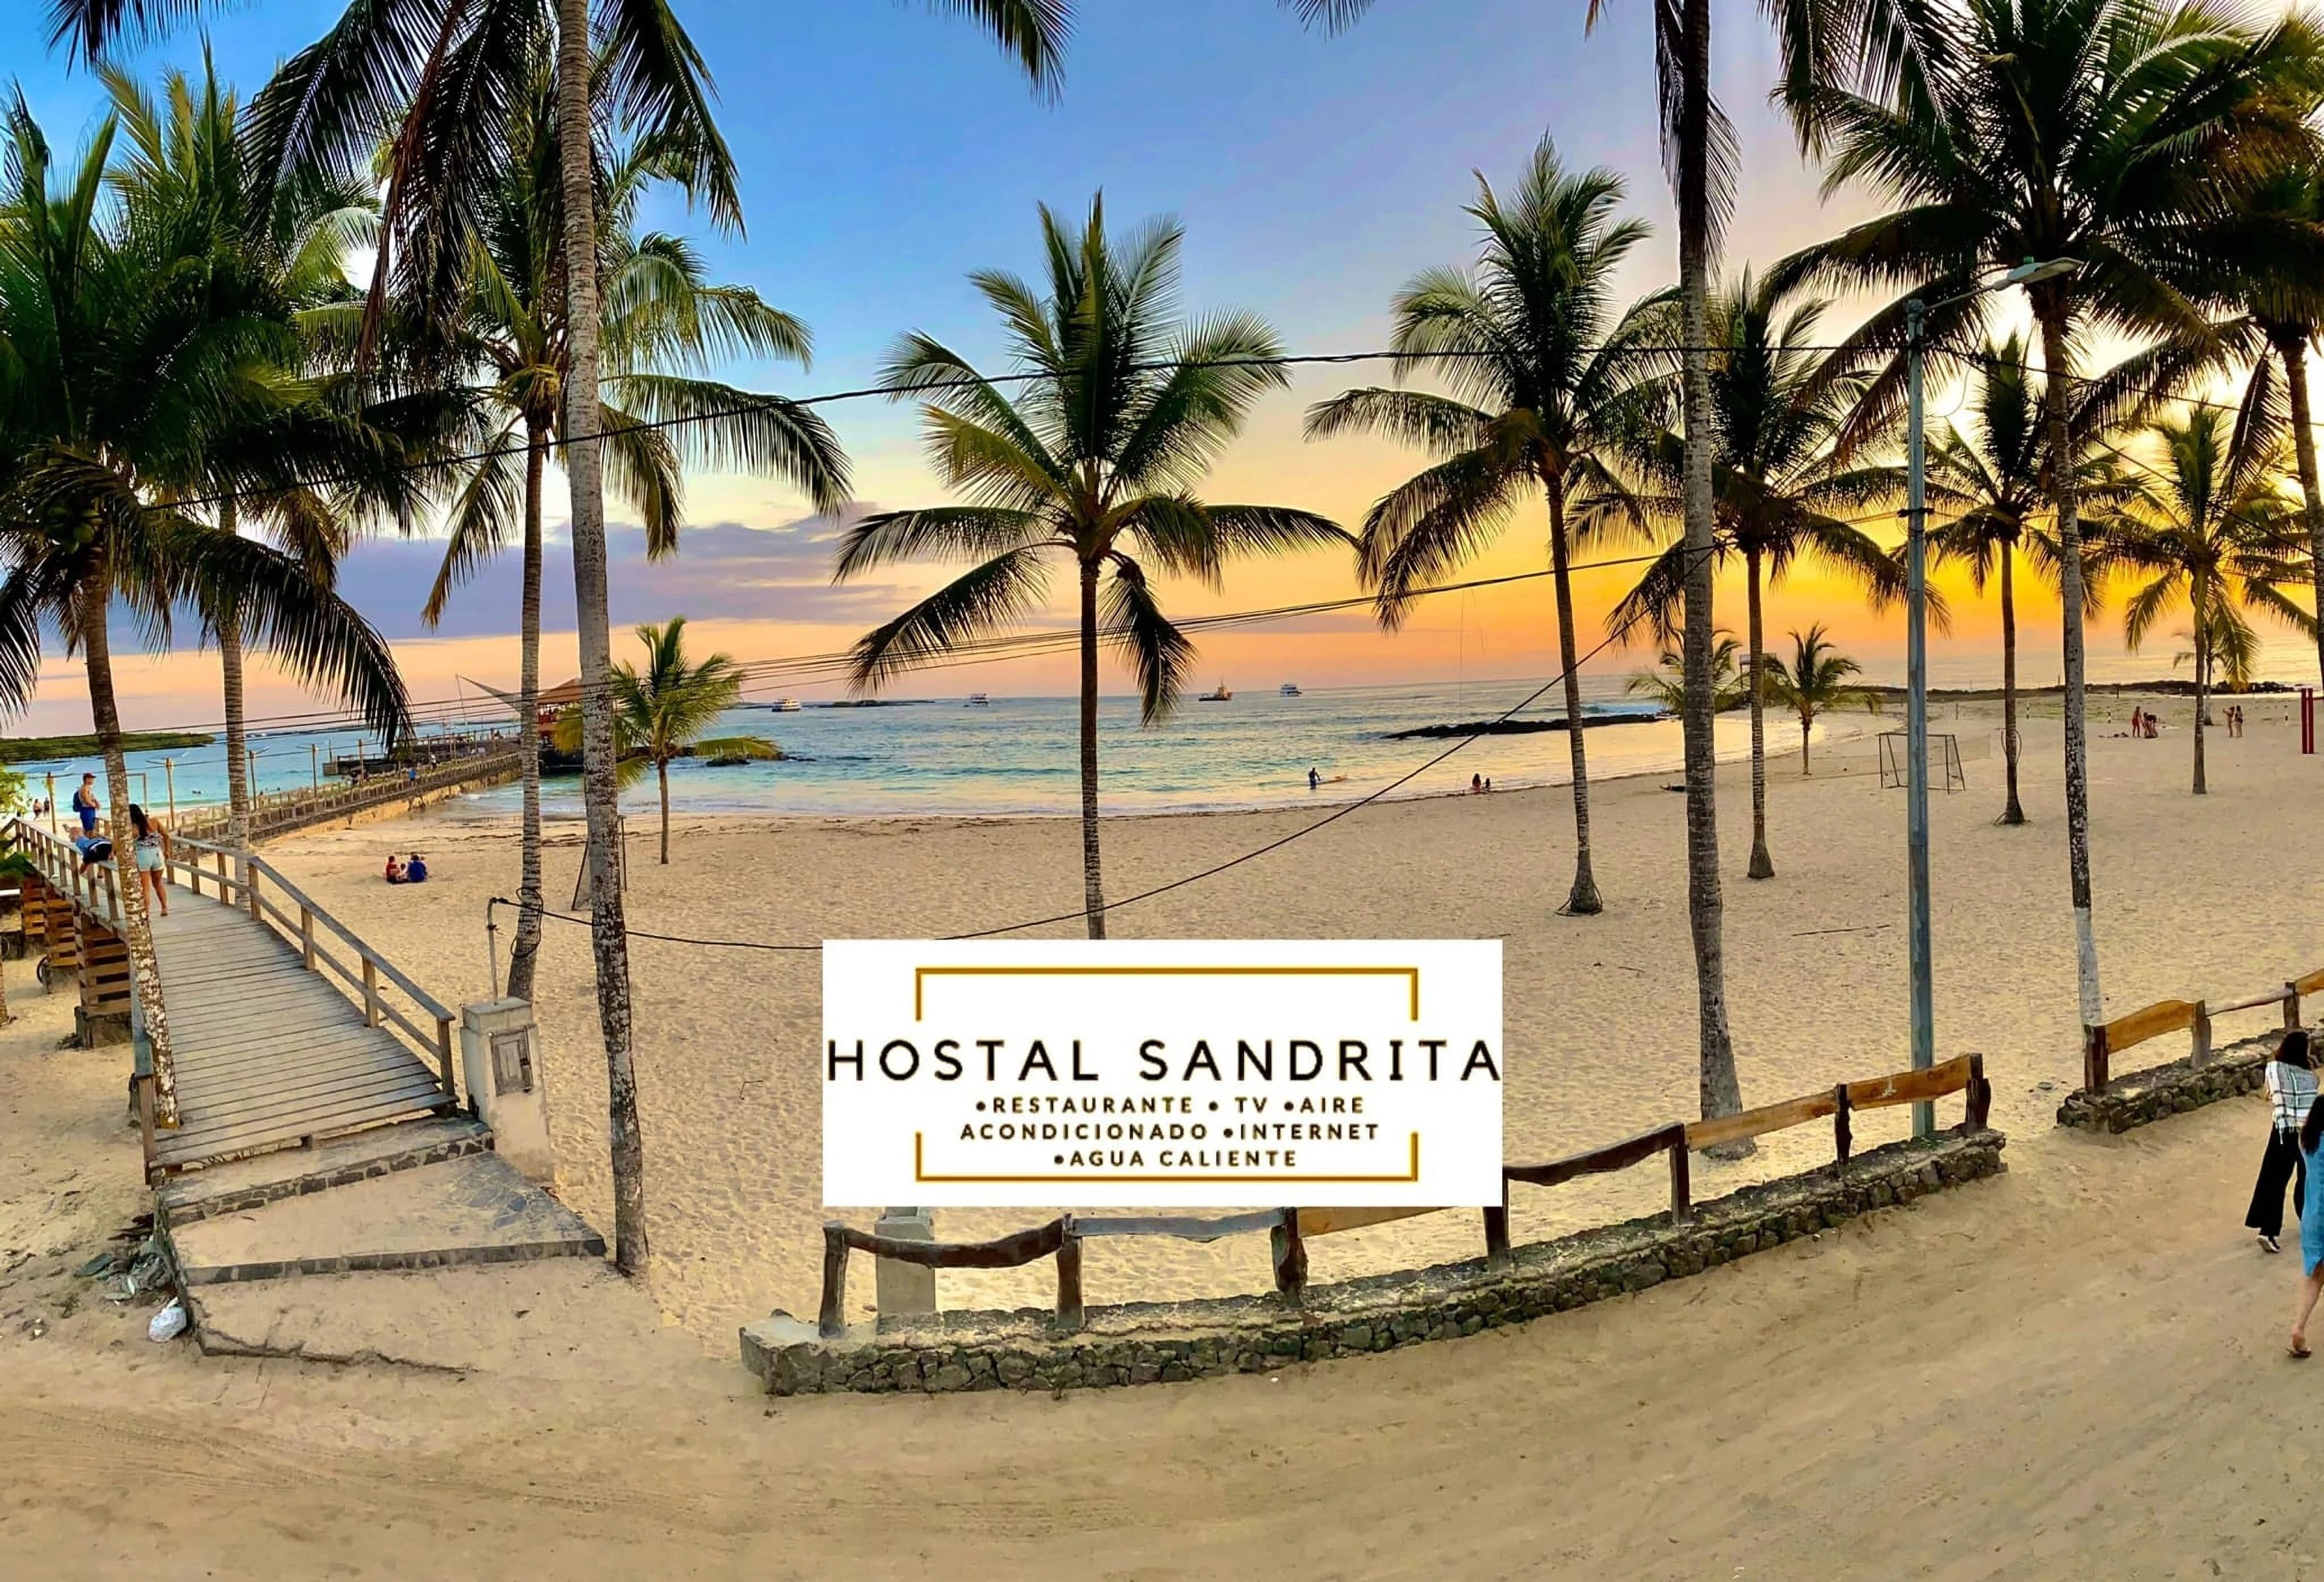 Hoteles-sandrita-13858